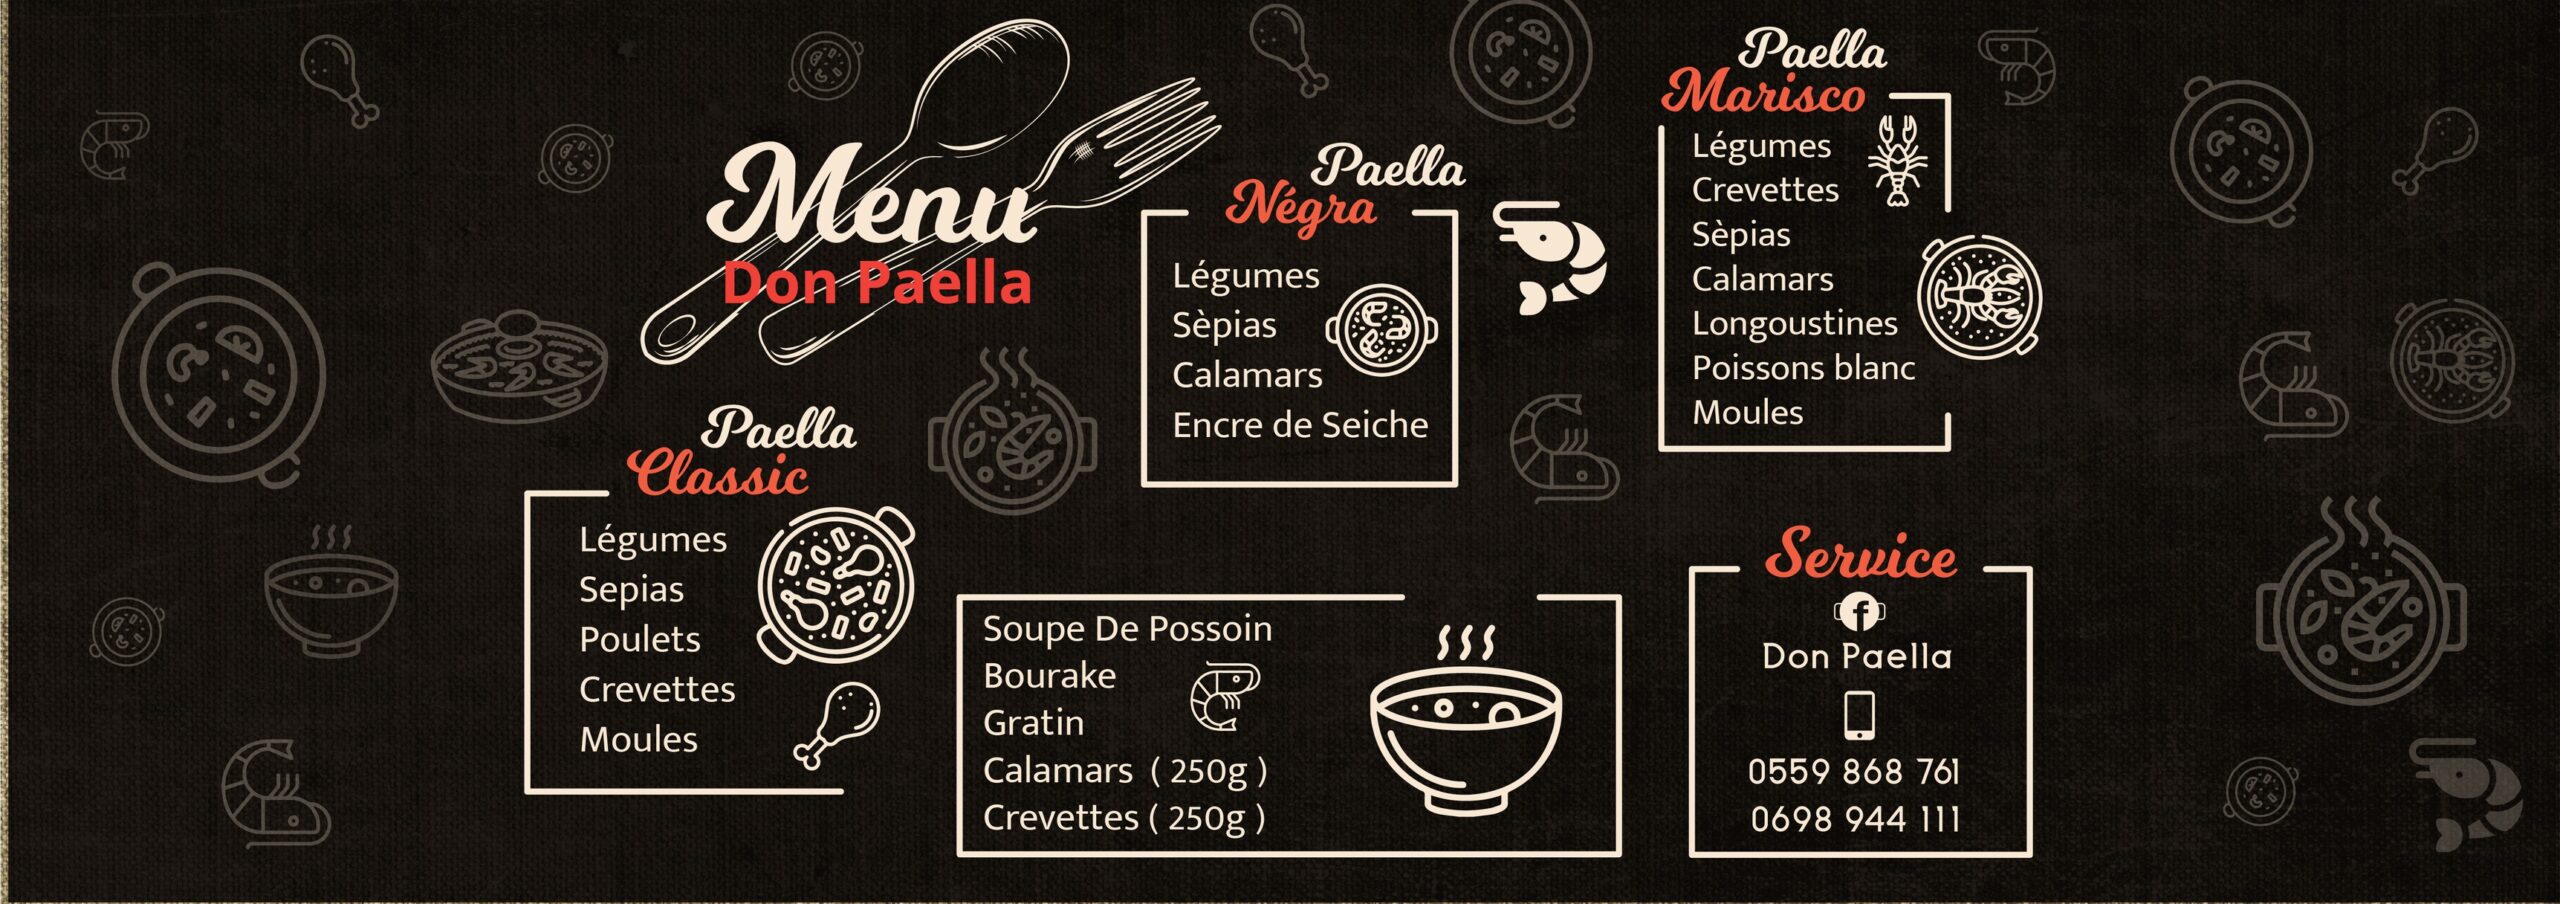 don paella